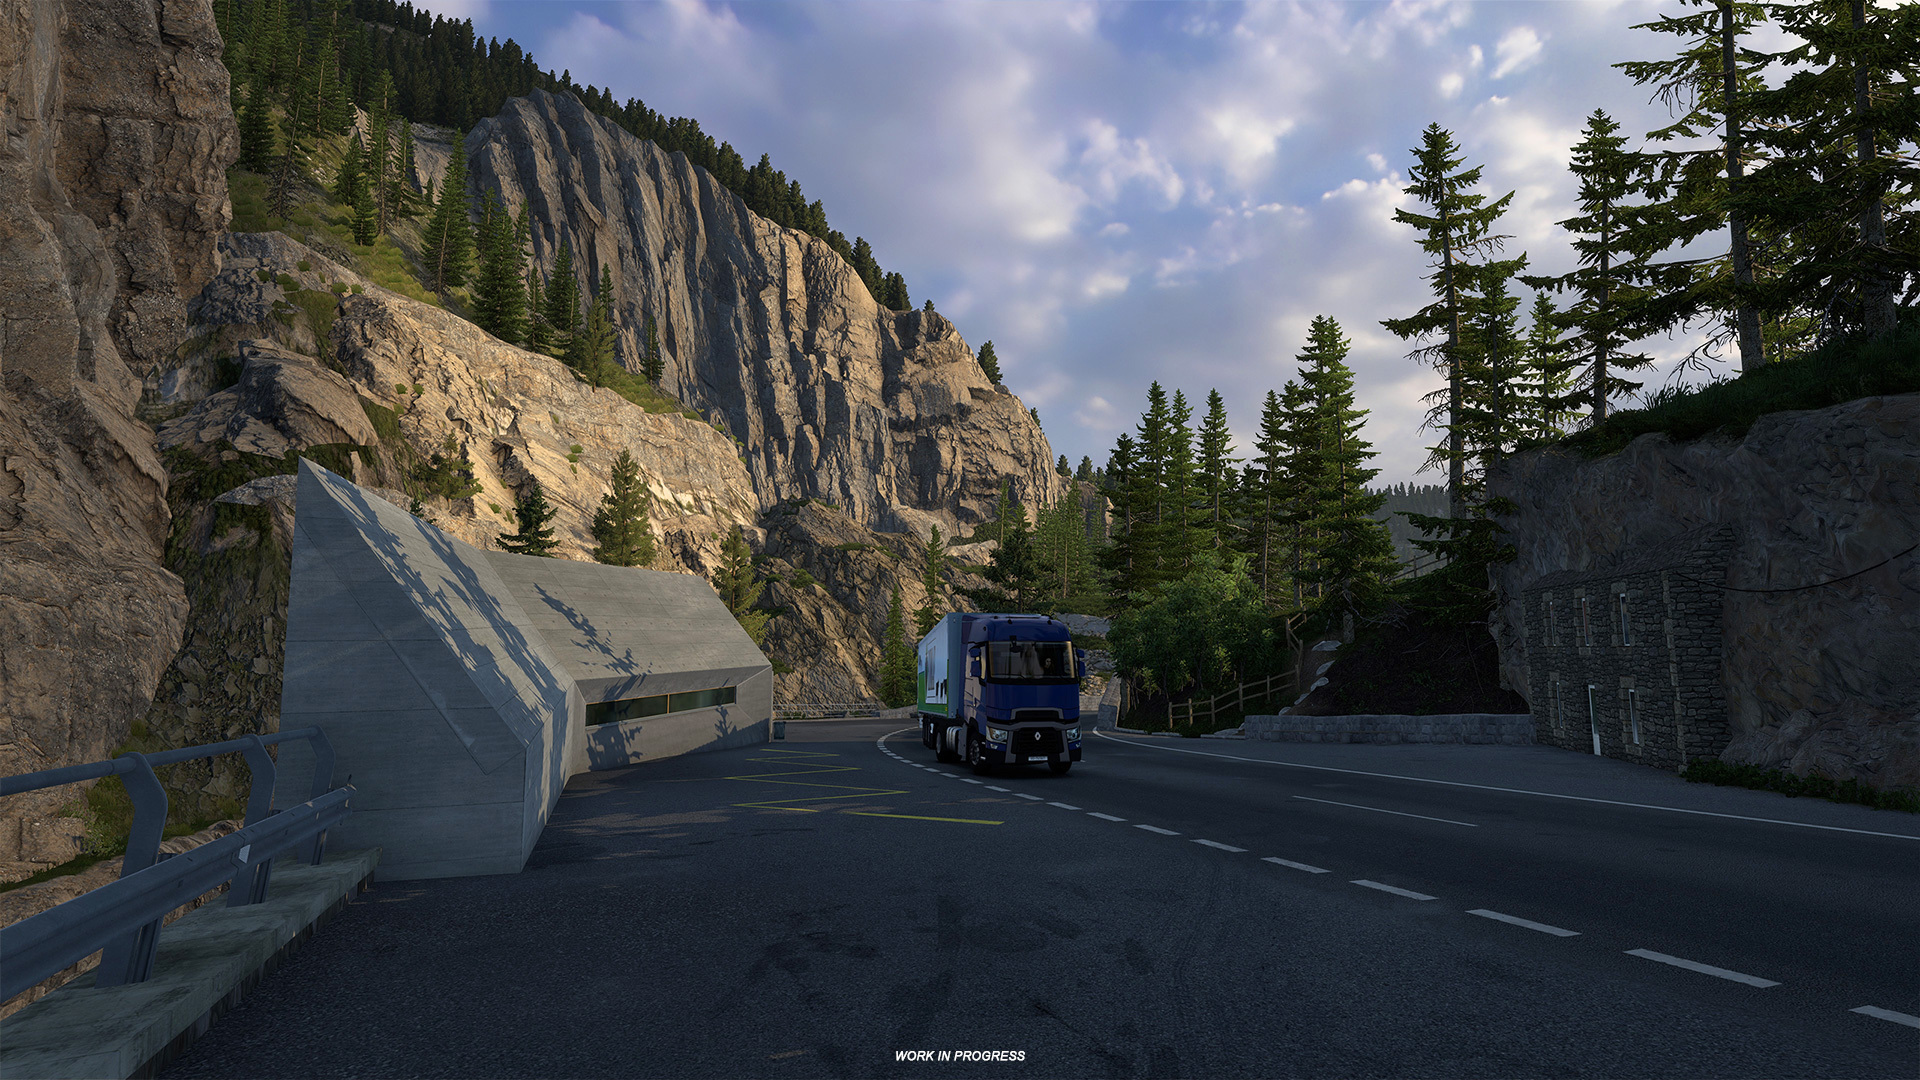 Steam Community :: Screenshot :: Euro Truck Simulator 2 - PC Gamer DLC